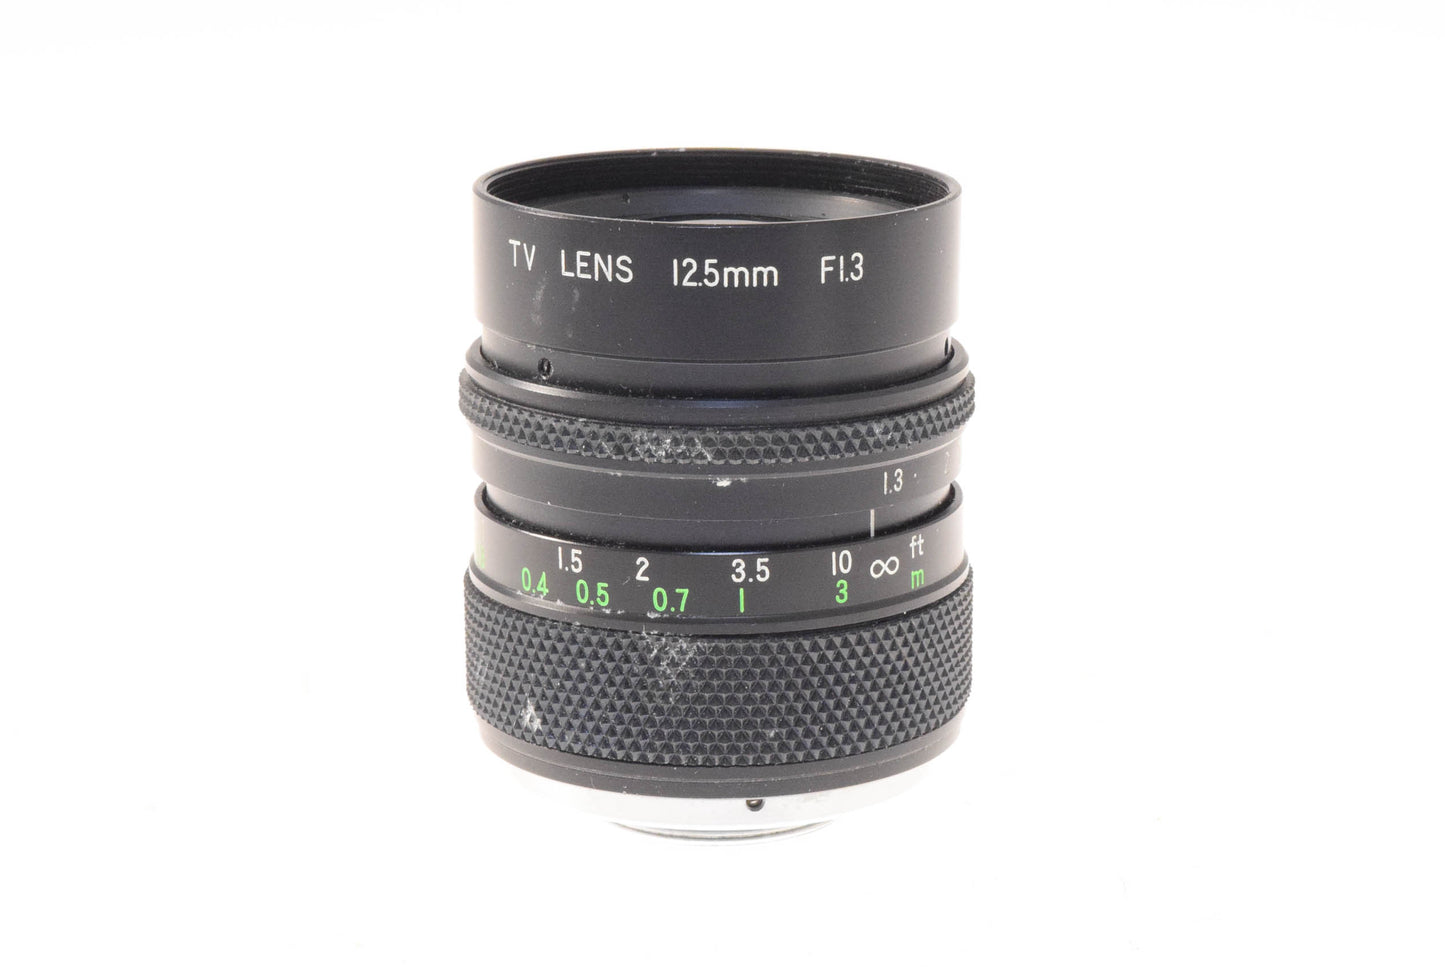 Generic 12.5mm f1.3 TV Lens - Lens